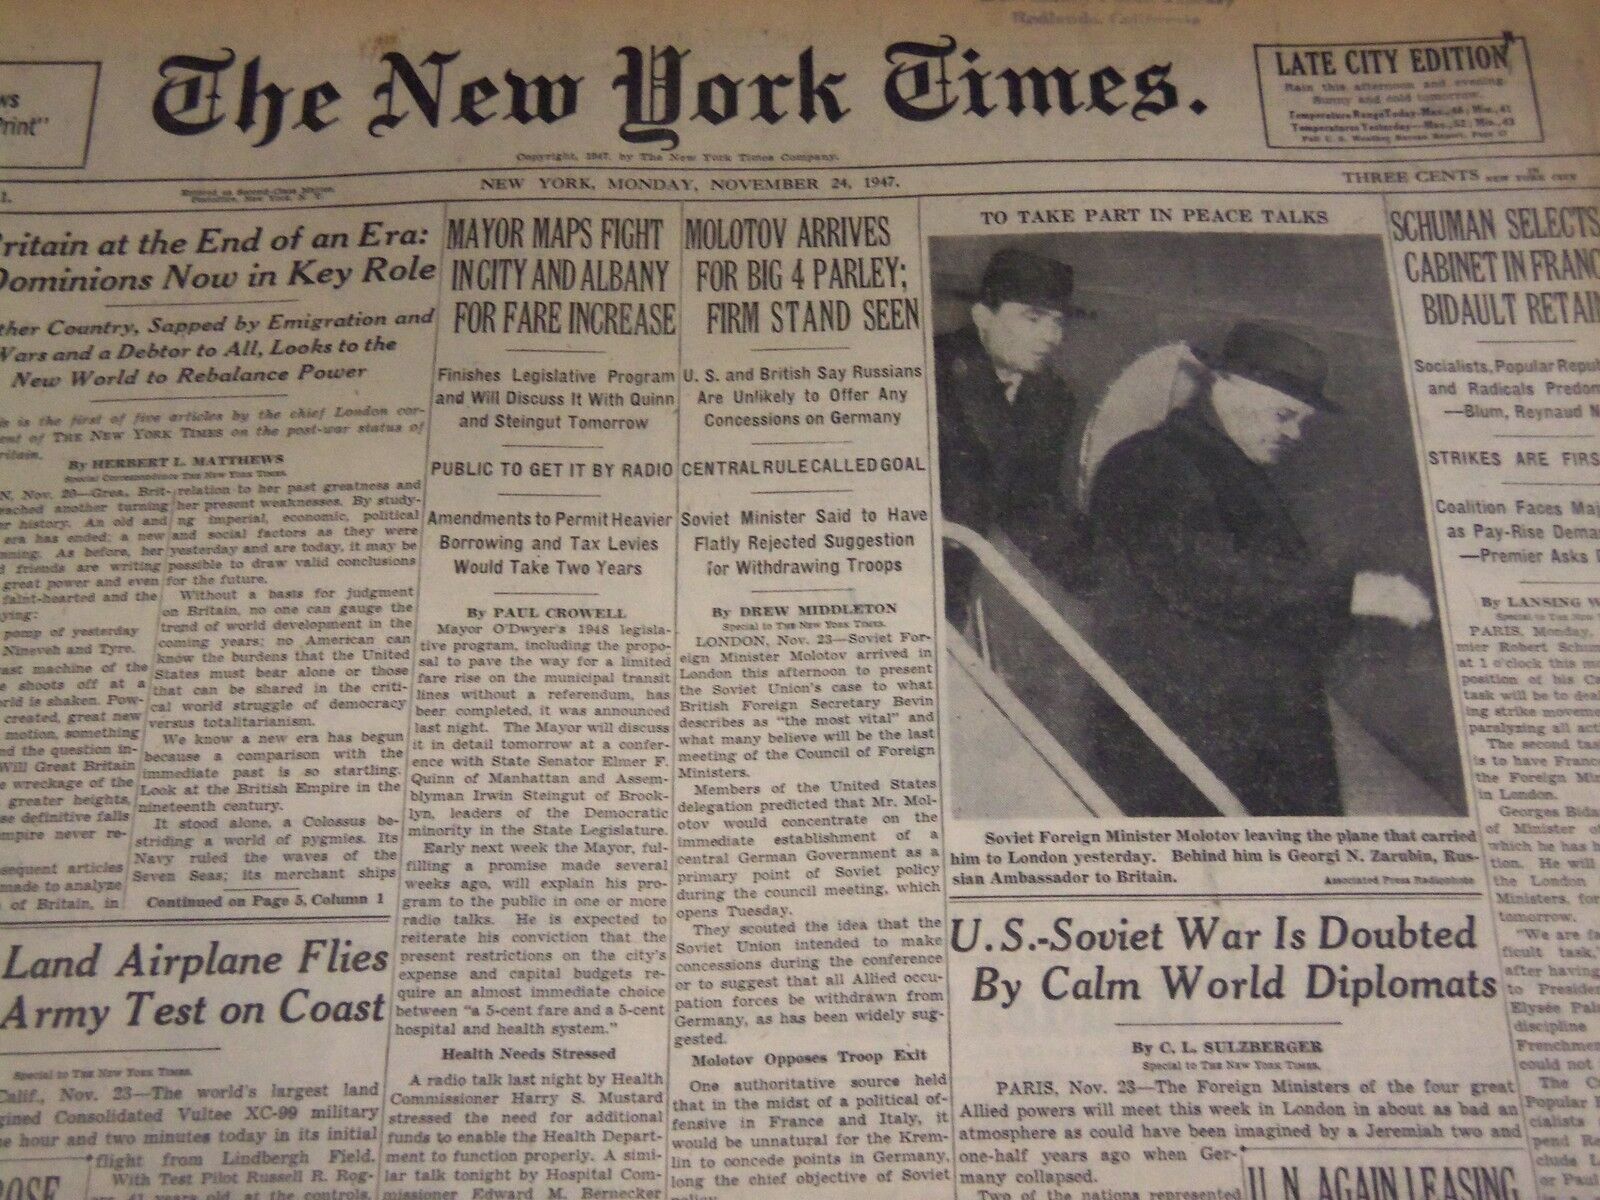 1947 NOVEMBER 24 NEW YORK TIMES - MOLOTOV ARRIVES FOR PARLEY - NT 3281